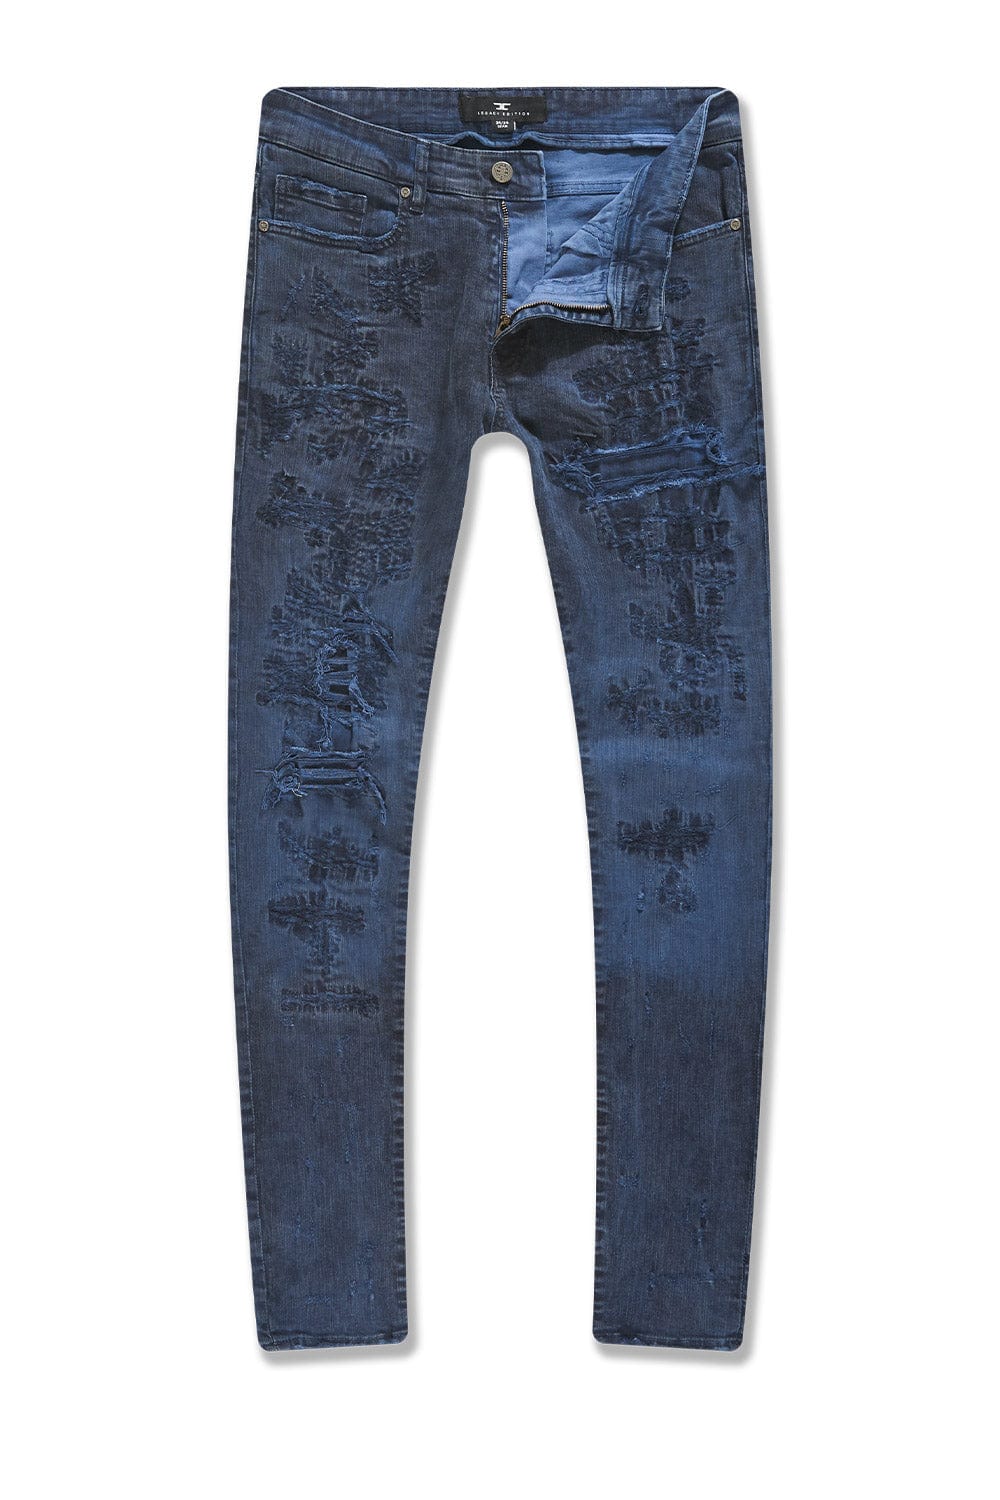 Jordan Craig Legacy Edition Raphael Paint Splatter Jeans Dark Blue 34 X 30